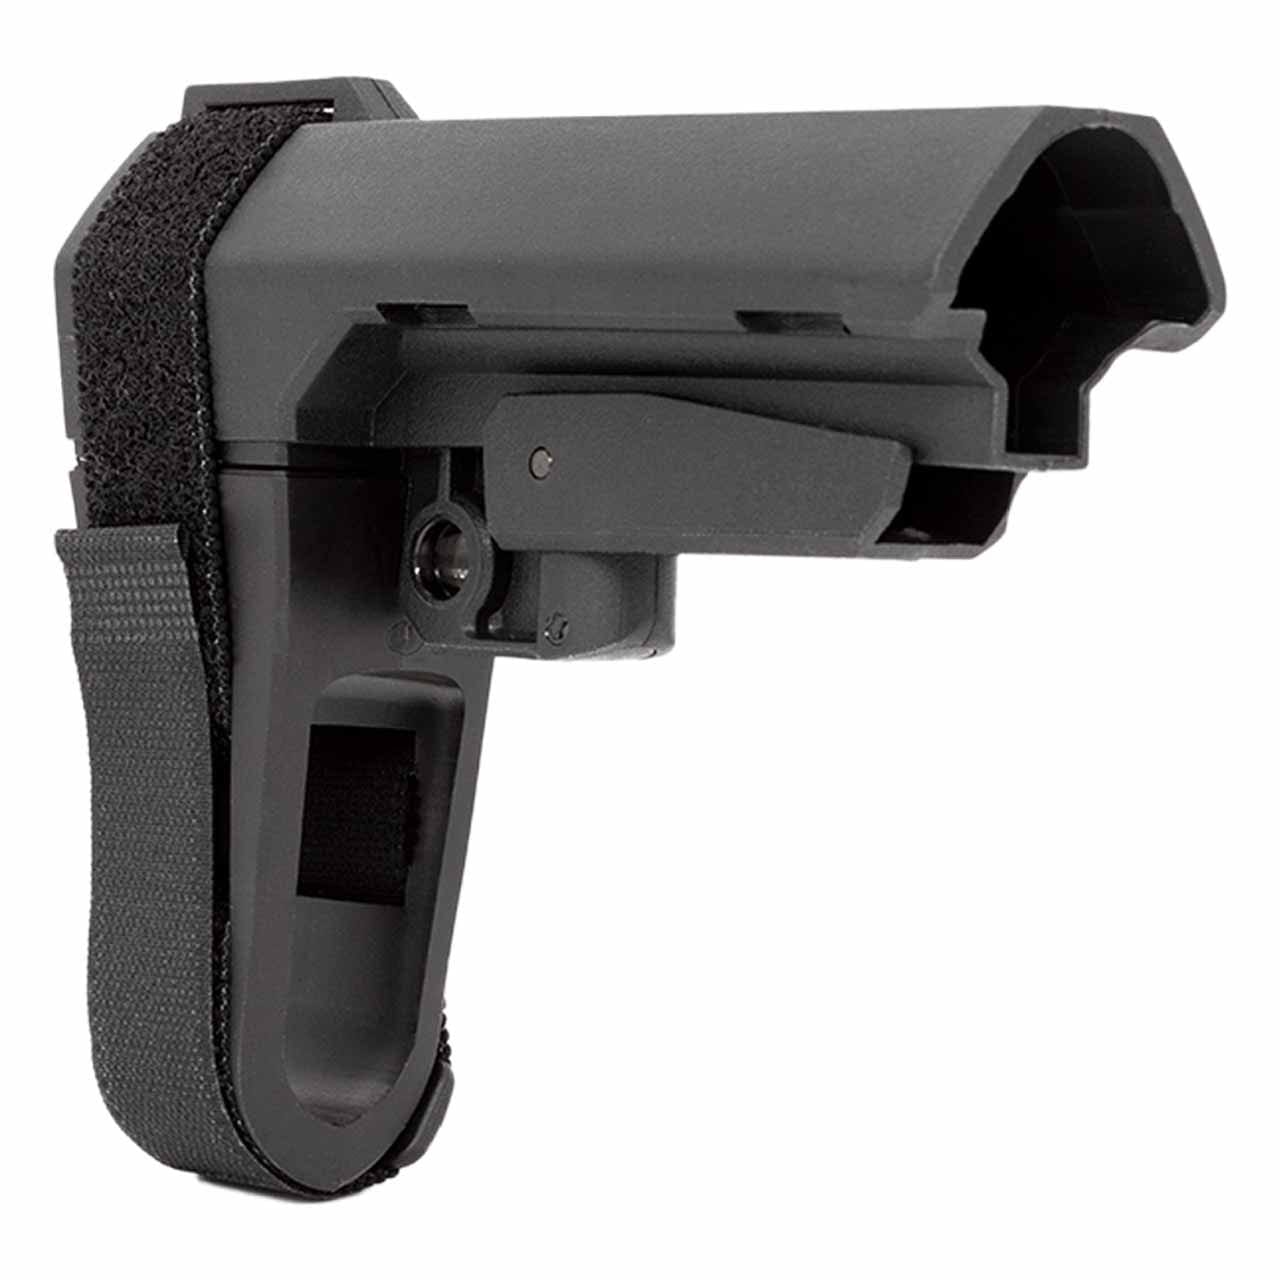 Image of SBA3 Pistol Stabilizing Brace by SB Tactical (5-Position, Black)